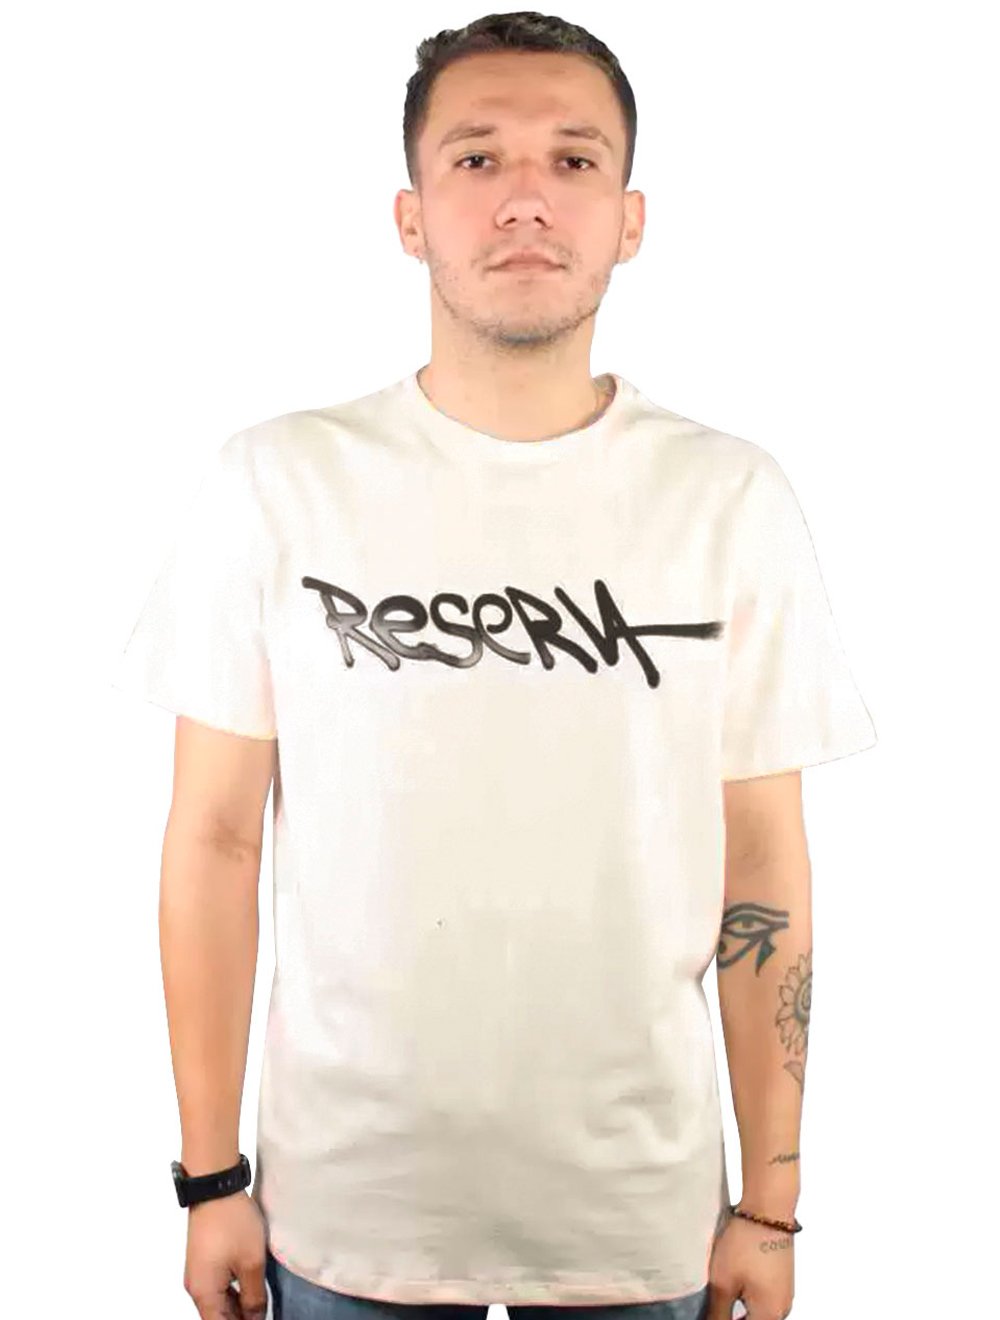 Camiseta Reserva Masculina Regular RSV Tag Off-White